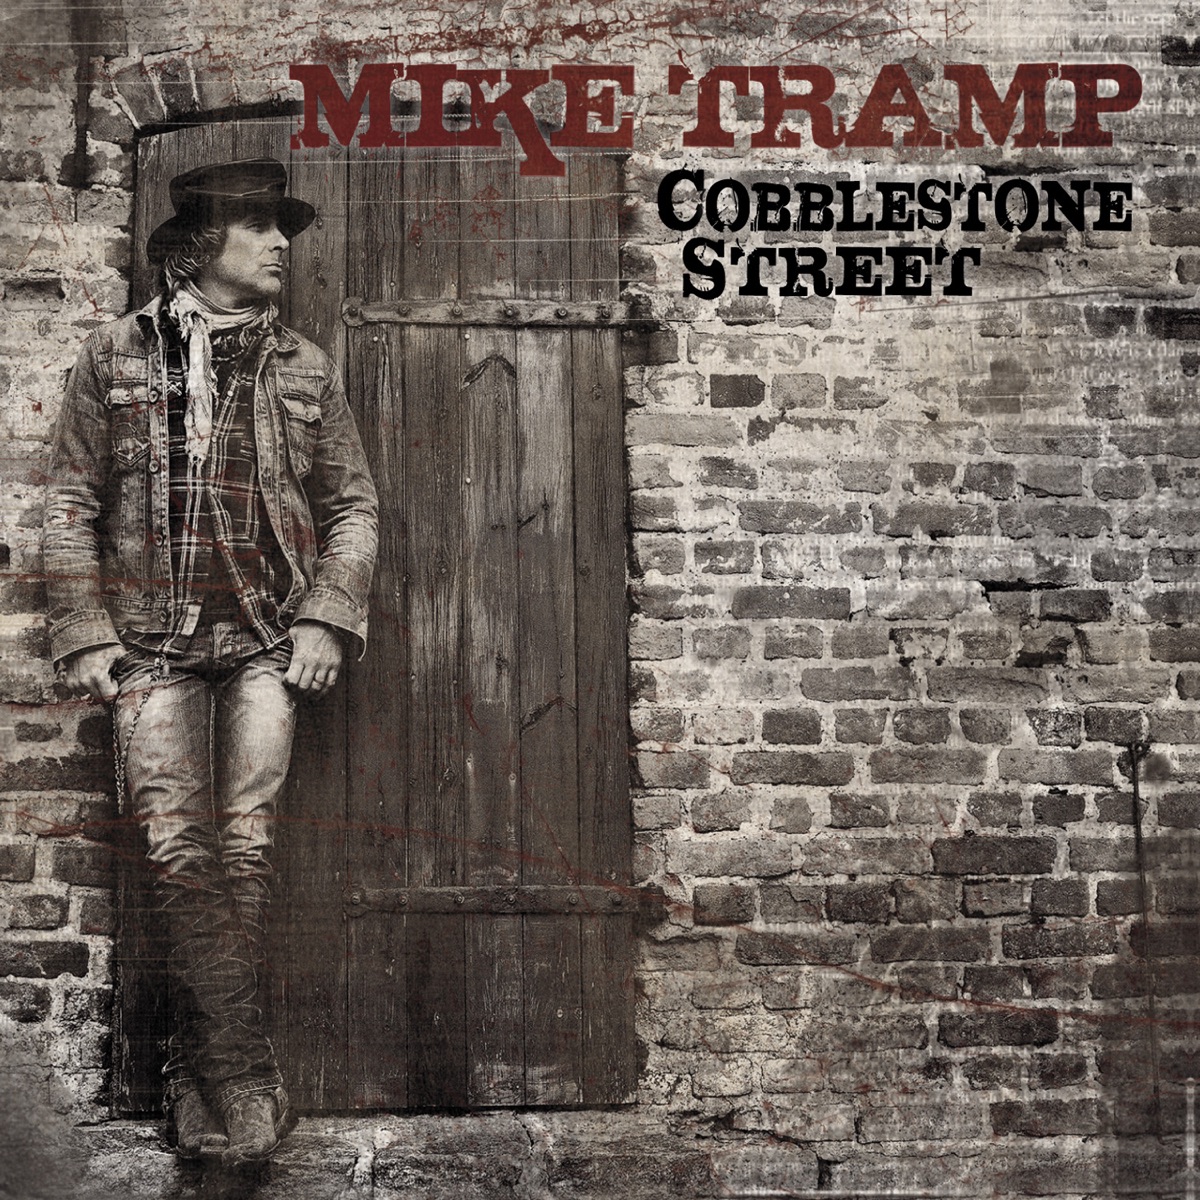 ‎Cobblestone Street - Album by Mike Tramp - Apple Music